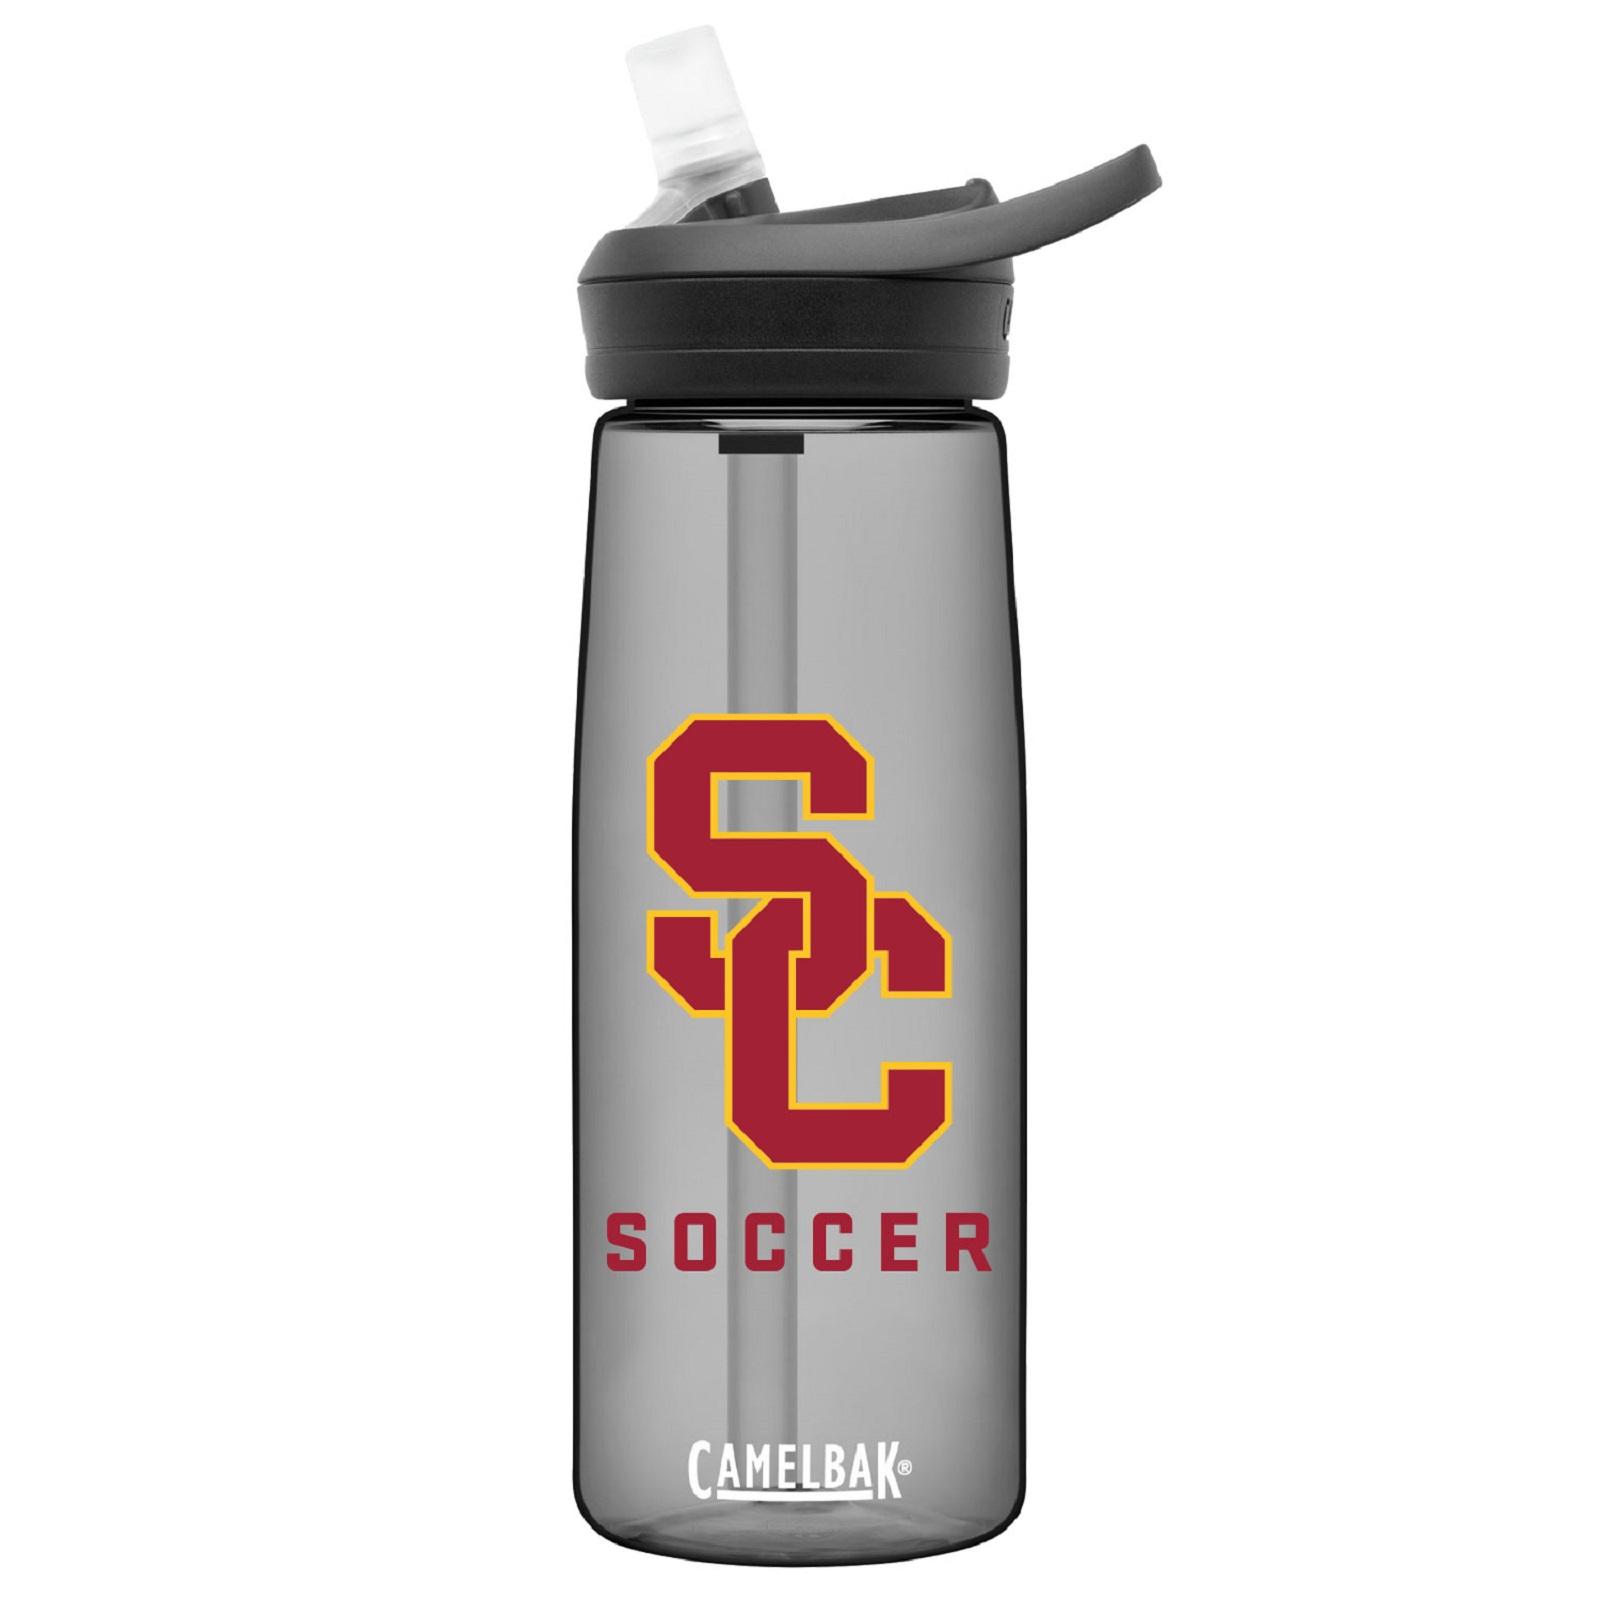 SC Interlock Soccer Camelbak Eddy Water Bottle image01